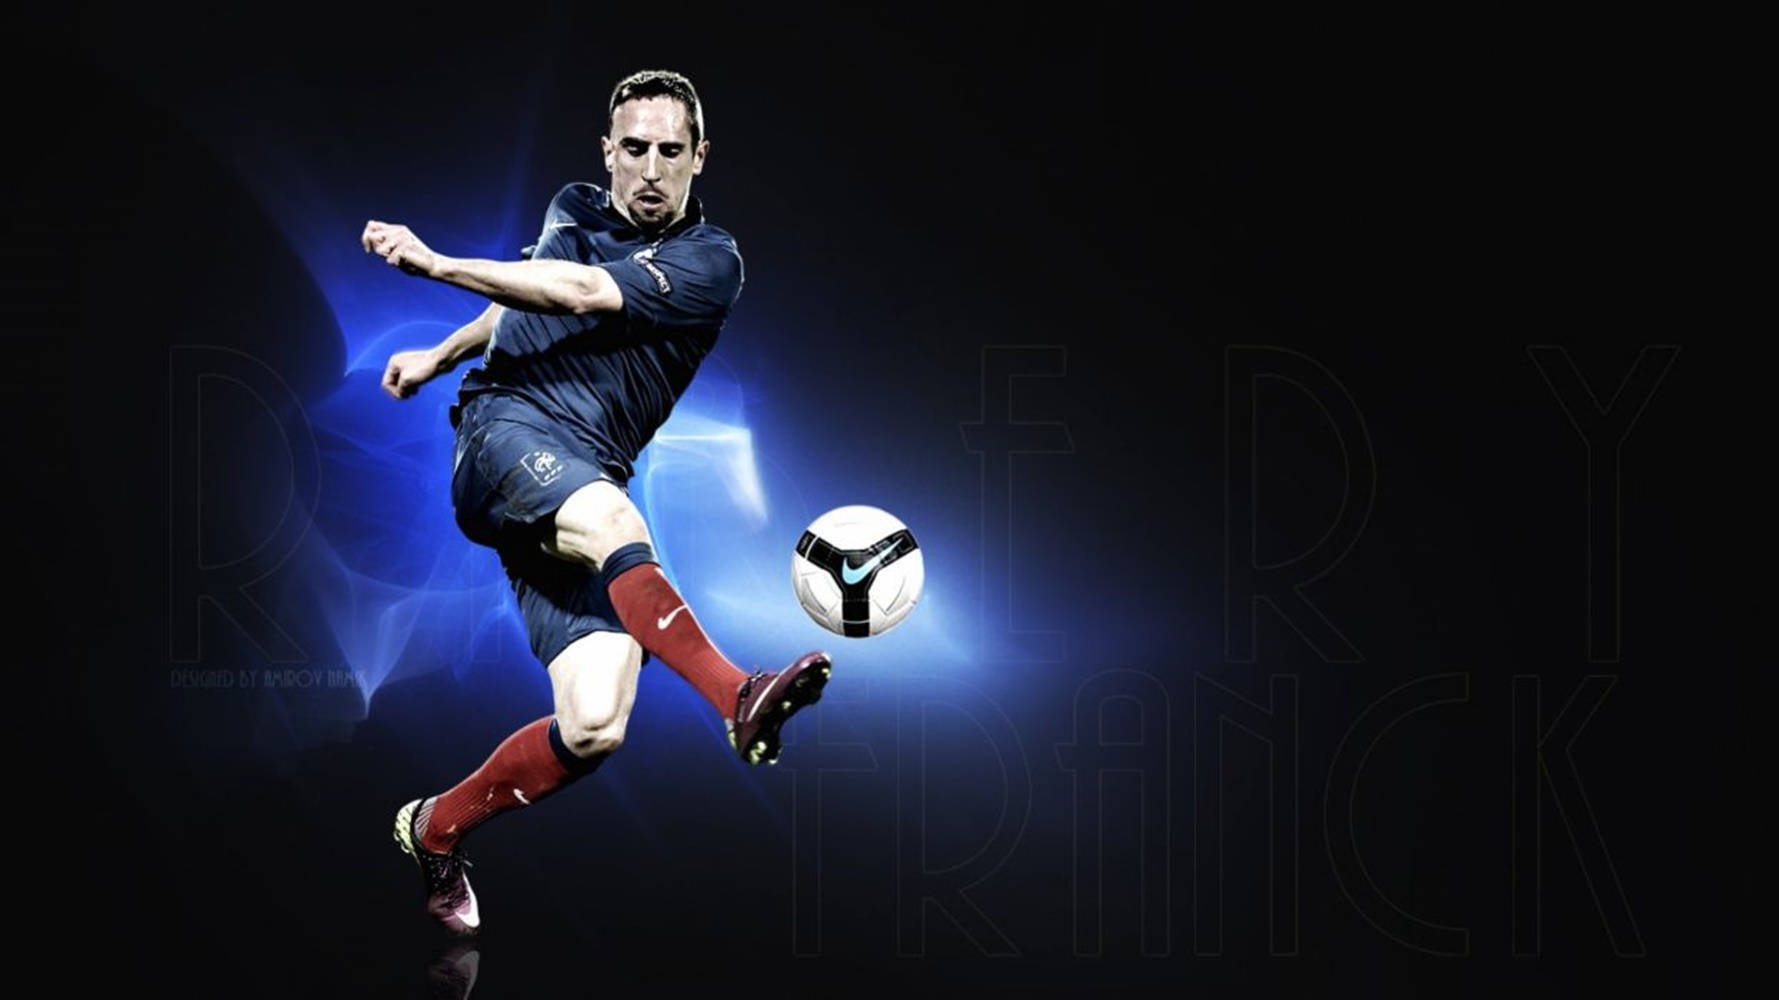 FIFA 21 Uruguayan FootBall Player Diego Godín Wallpaper